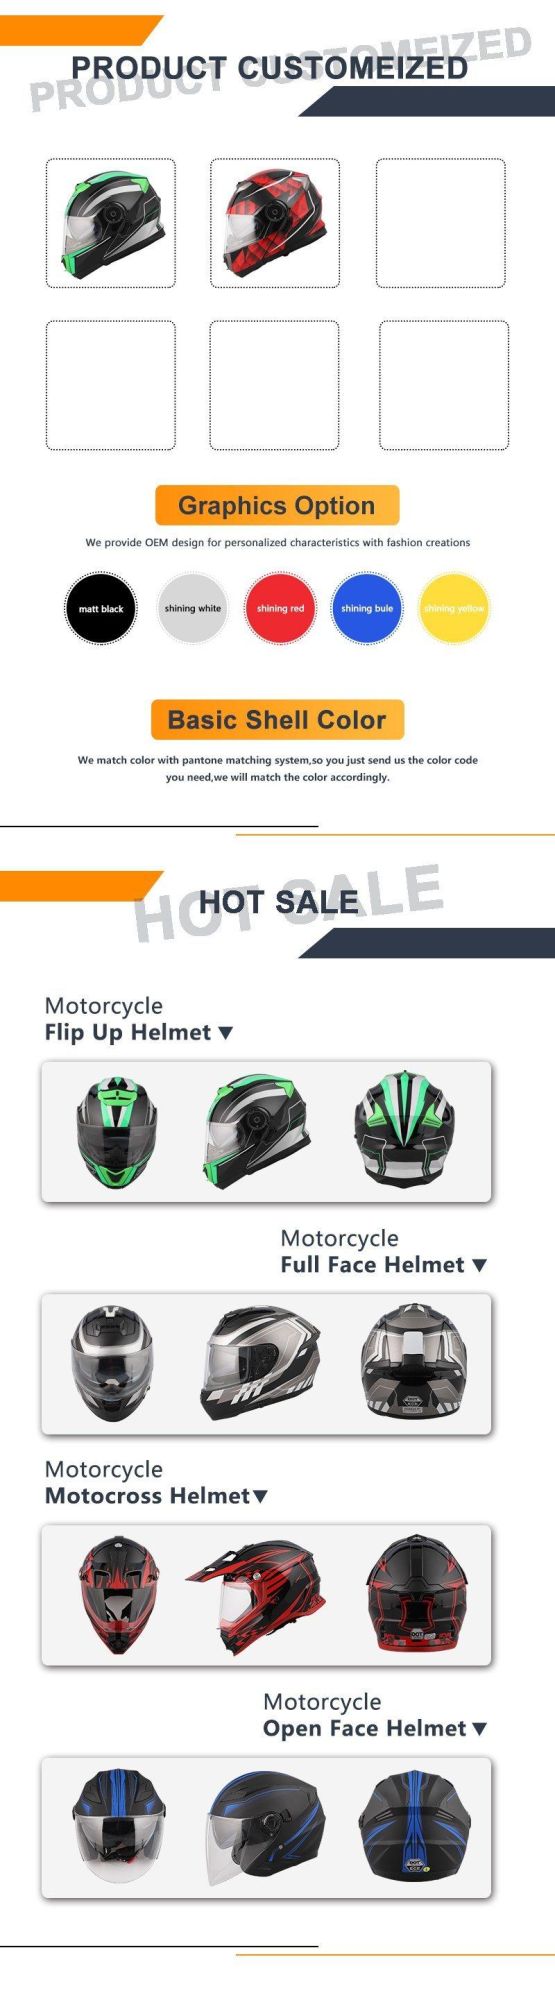 2020 New Arrived Hot Sale Motorcycle Helmets Mx Helmets